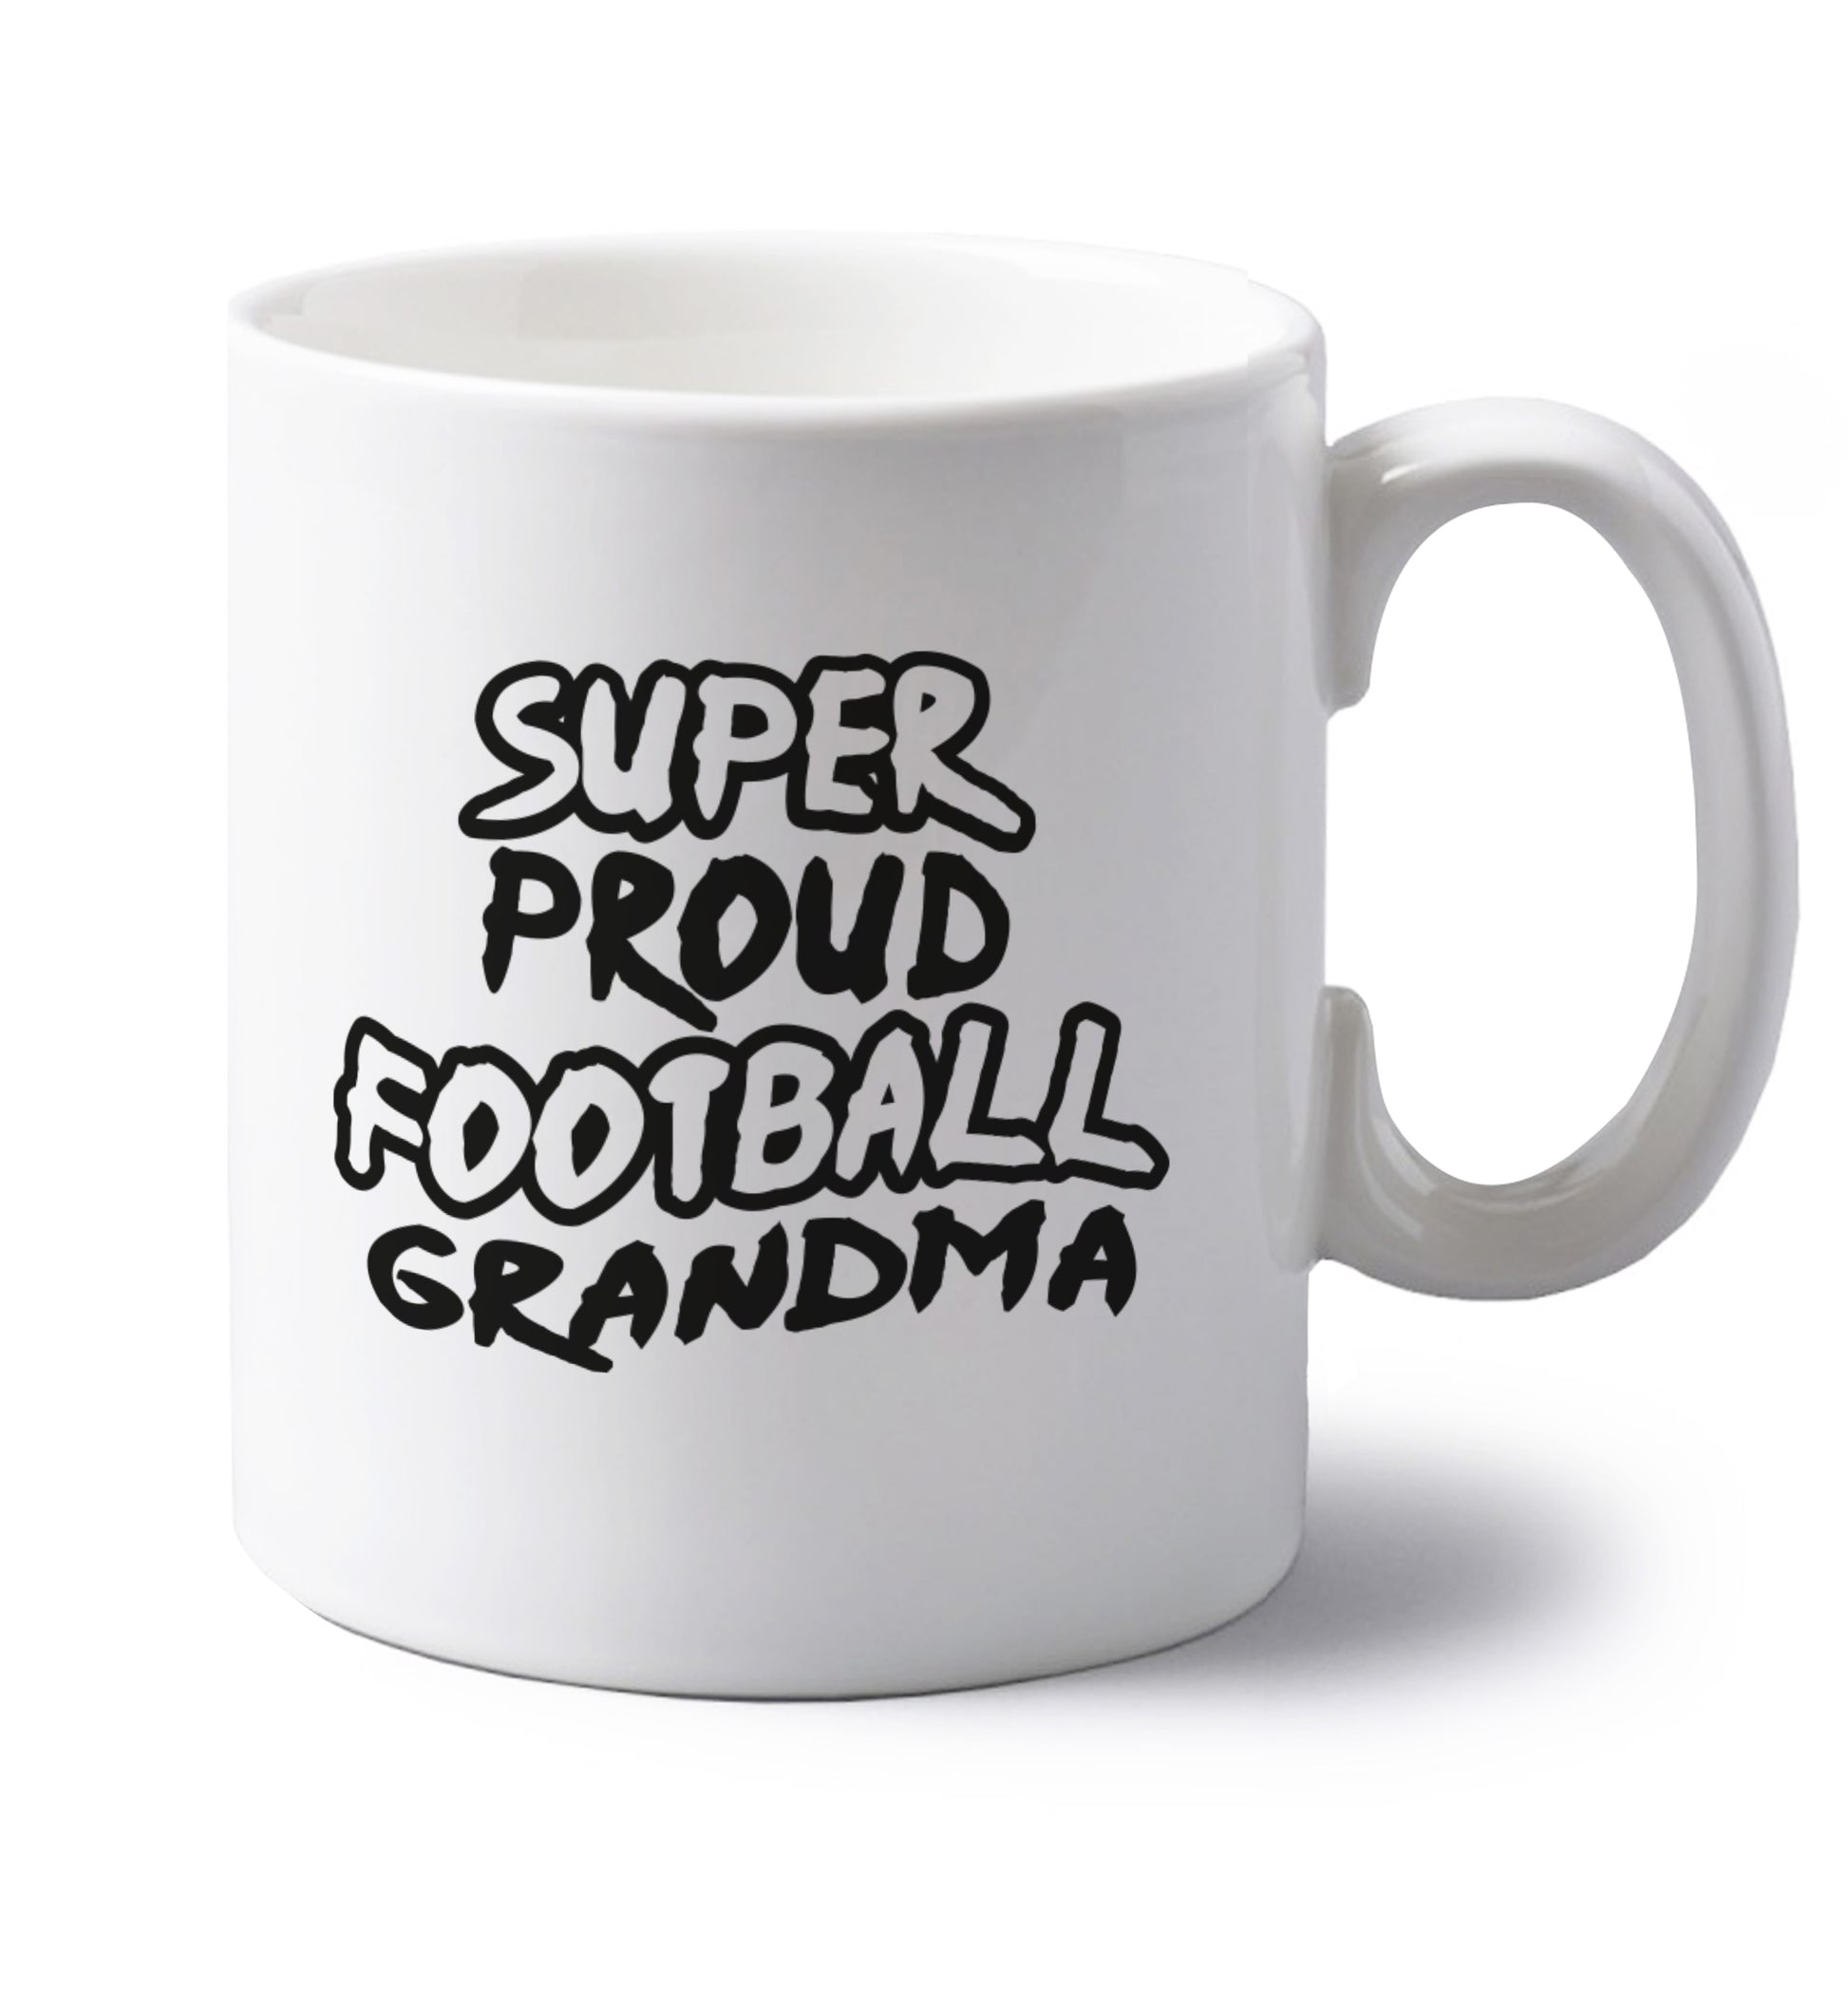 Super proud football grandma left handed white ceramic mug 